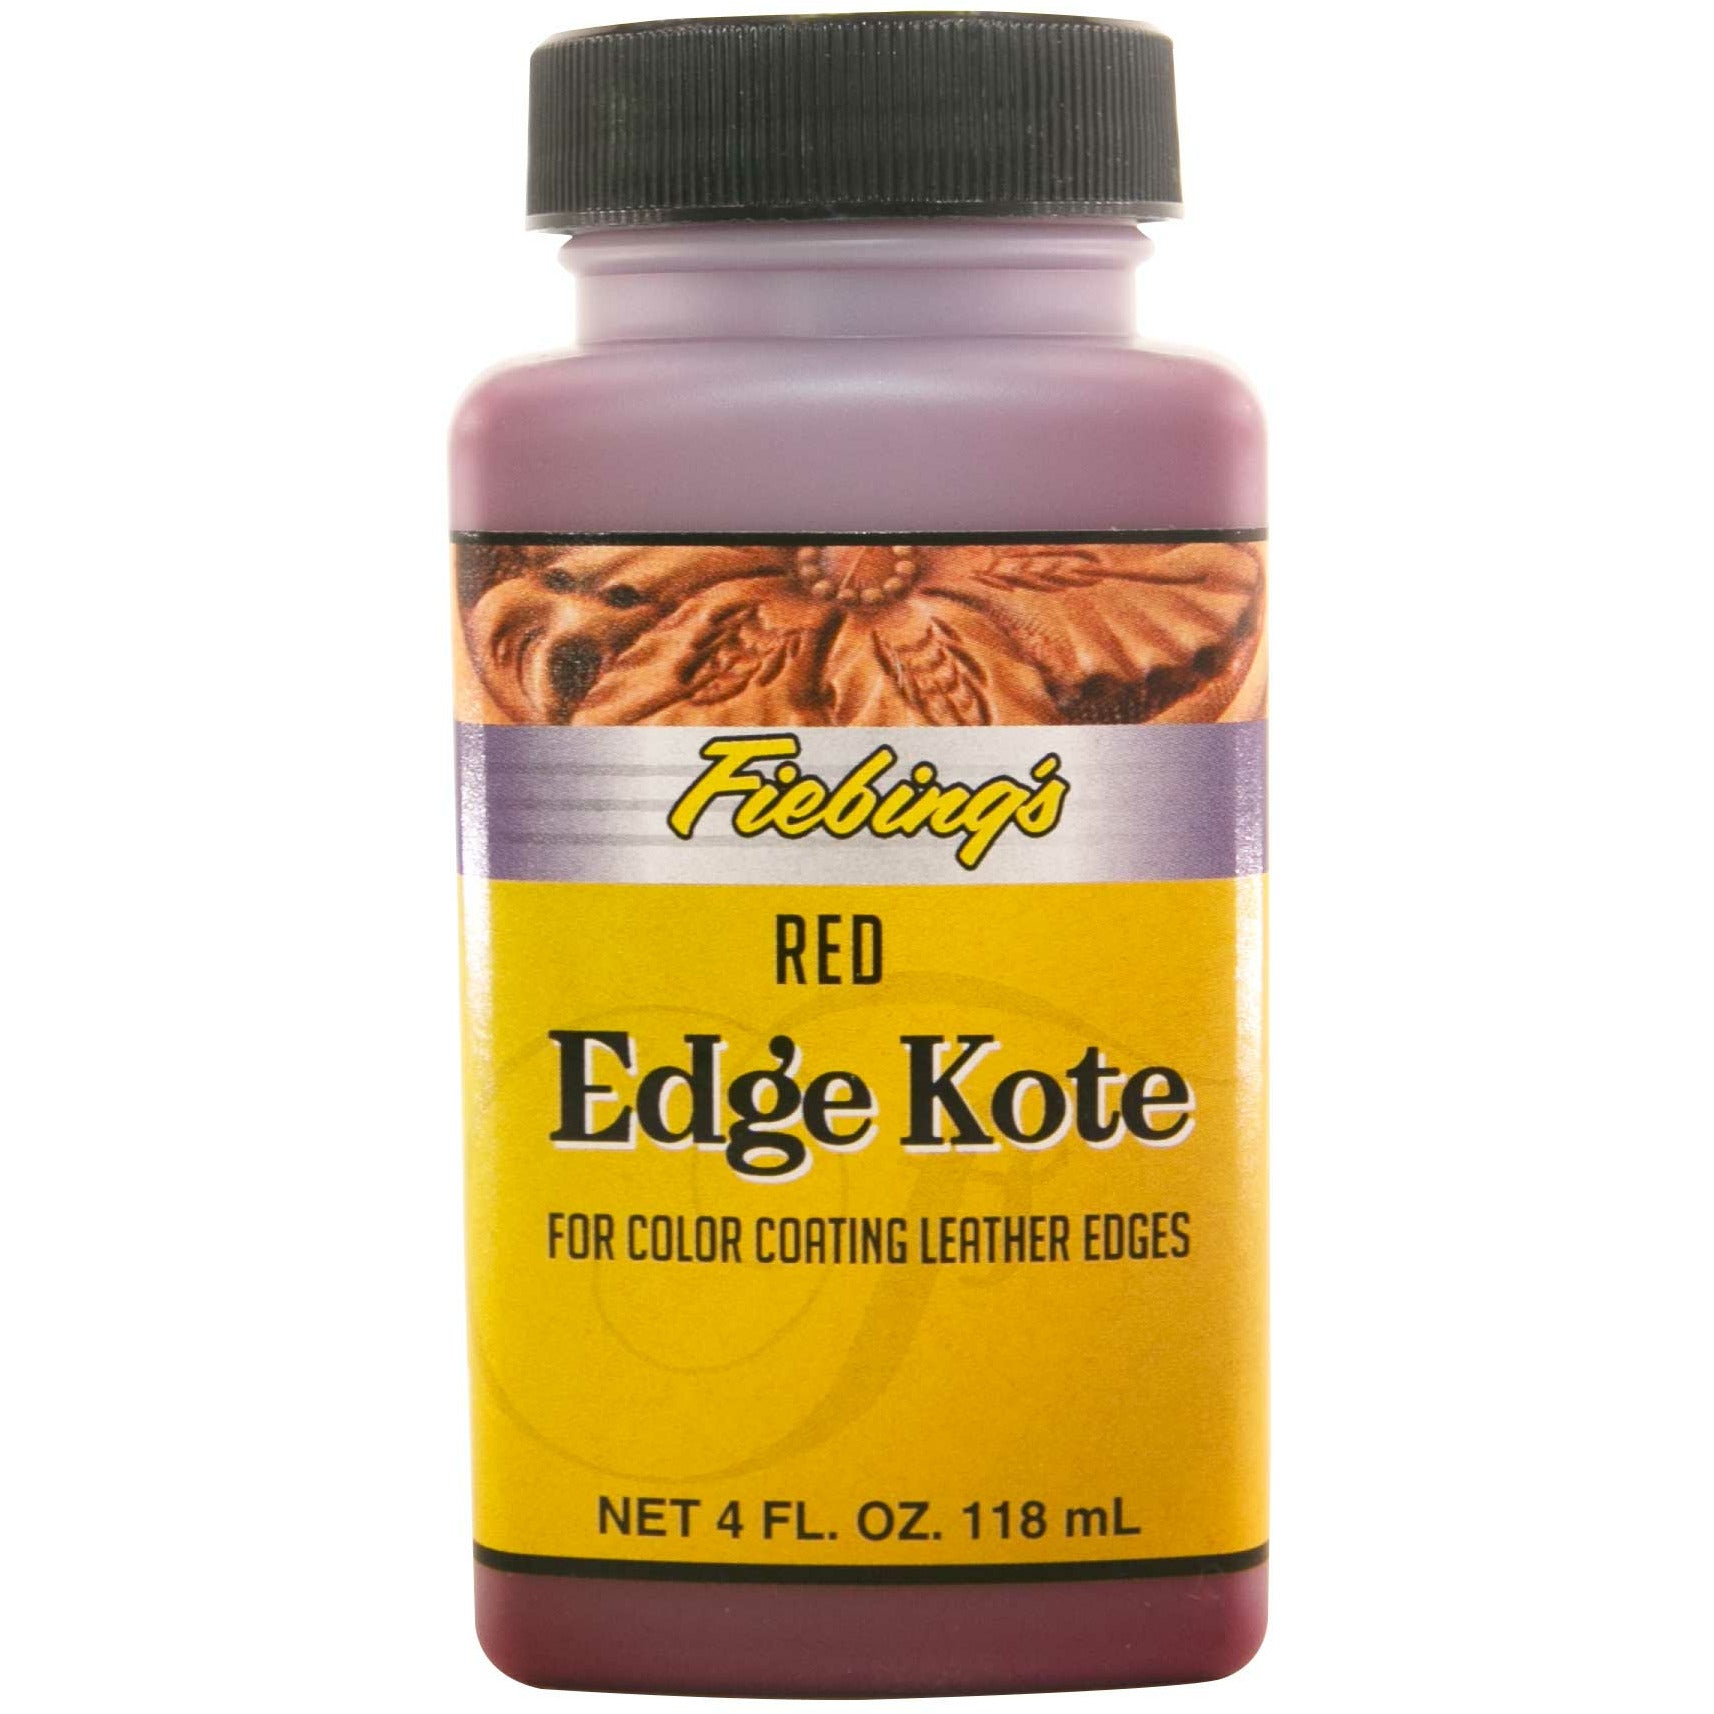 Fiebing's Edge Kote, Black - 4 fl oz bottle